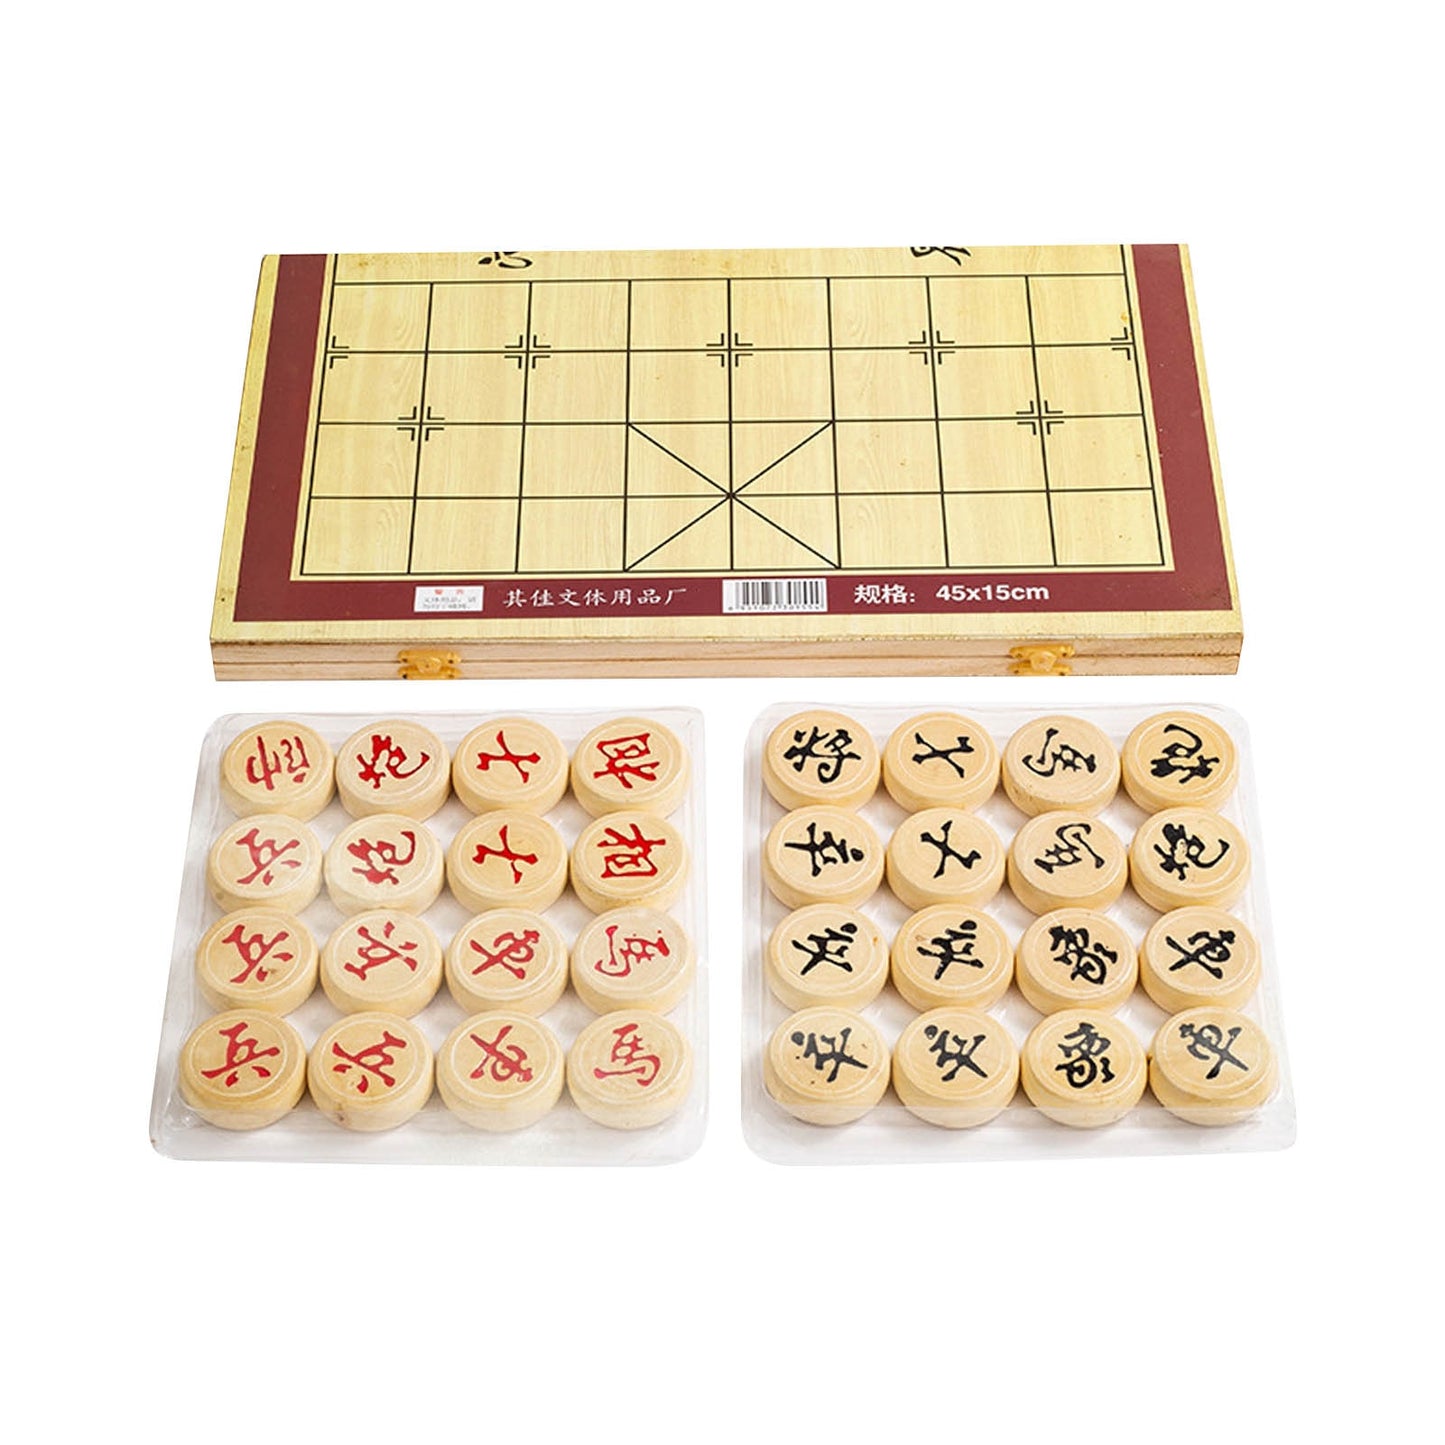 Wooden Chinese Chess Board Game Xiangqi